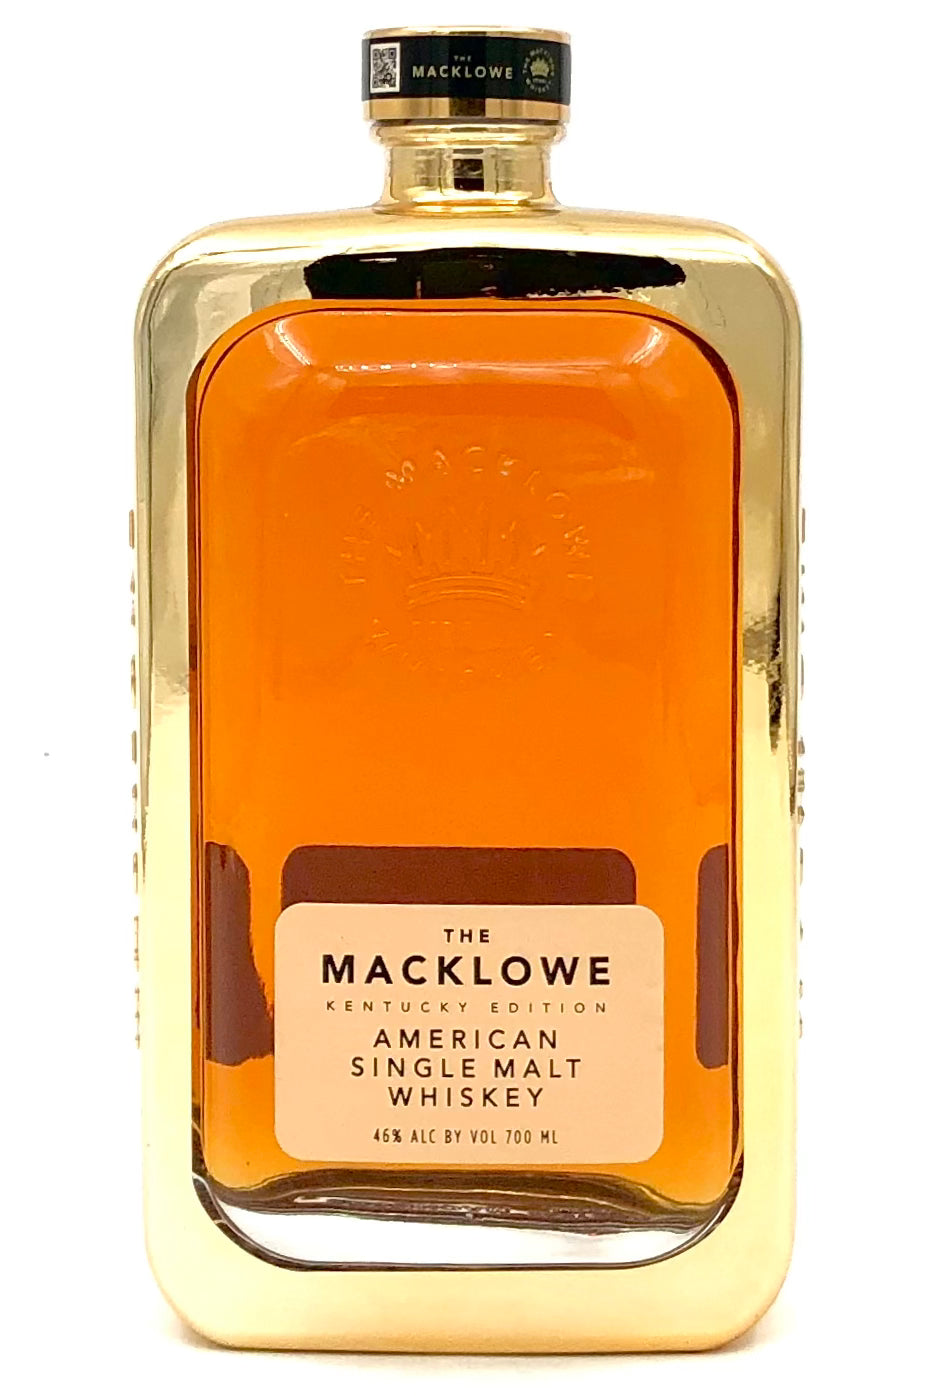 The Macklowe American Single Malt Whiskey Kentucky Gold Edition